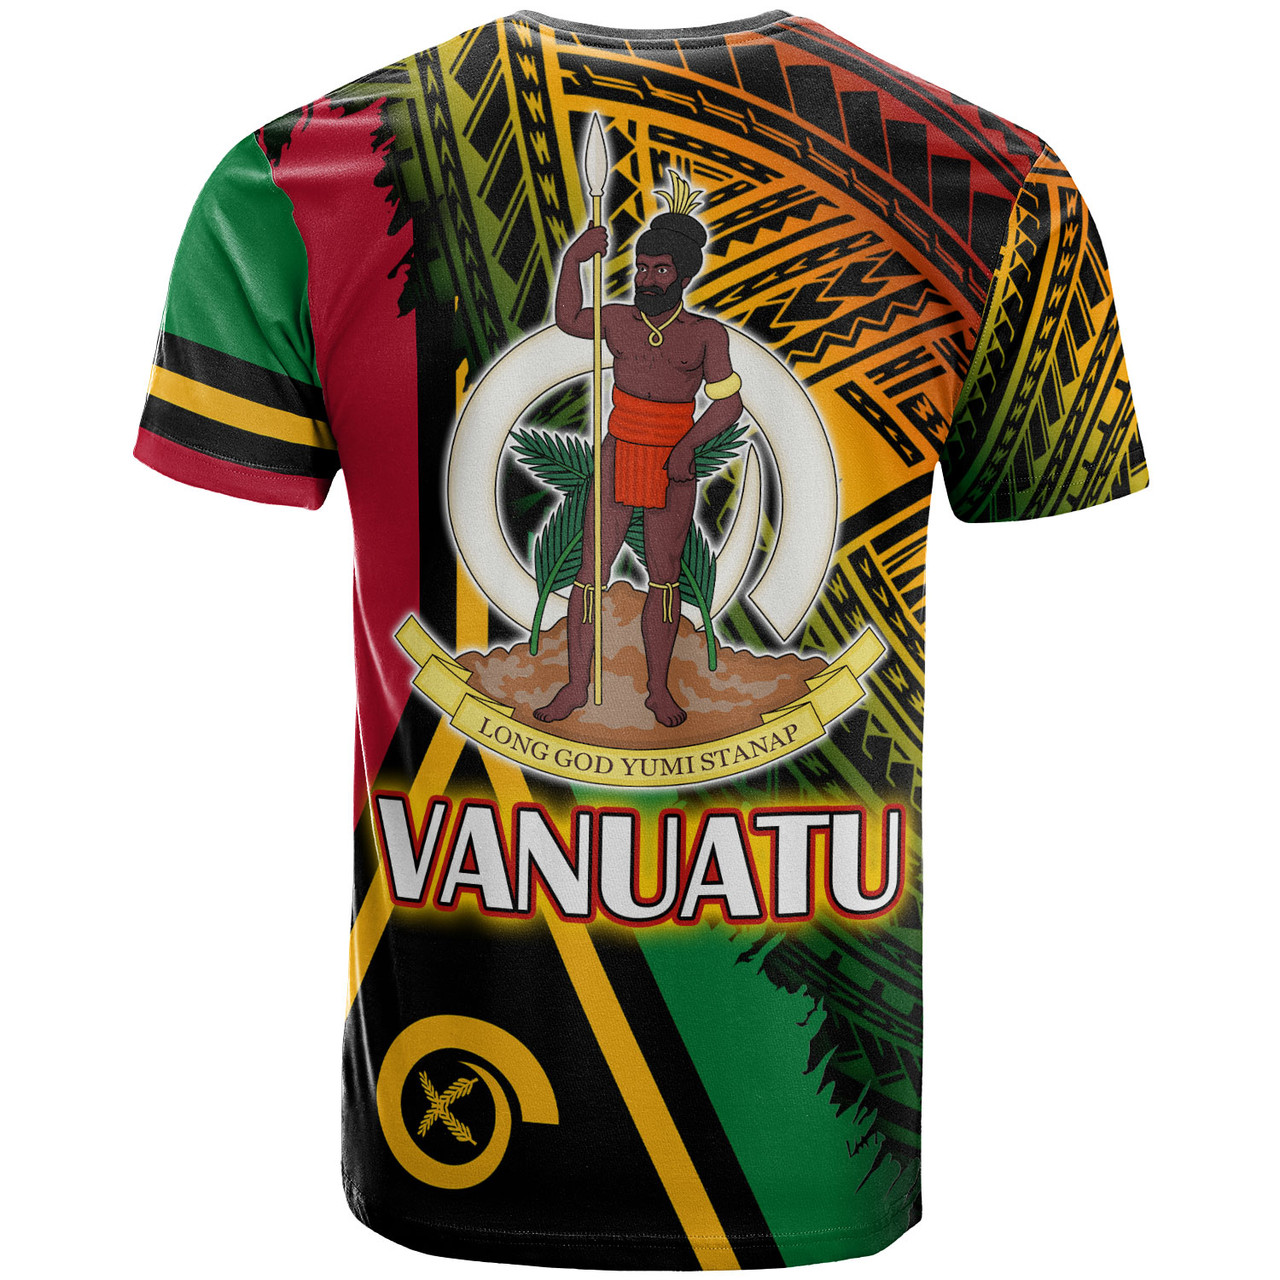 Vanuatu T-Shirt - Custom Polynesian Grunge Texture Style T-Shirt